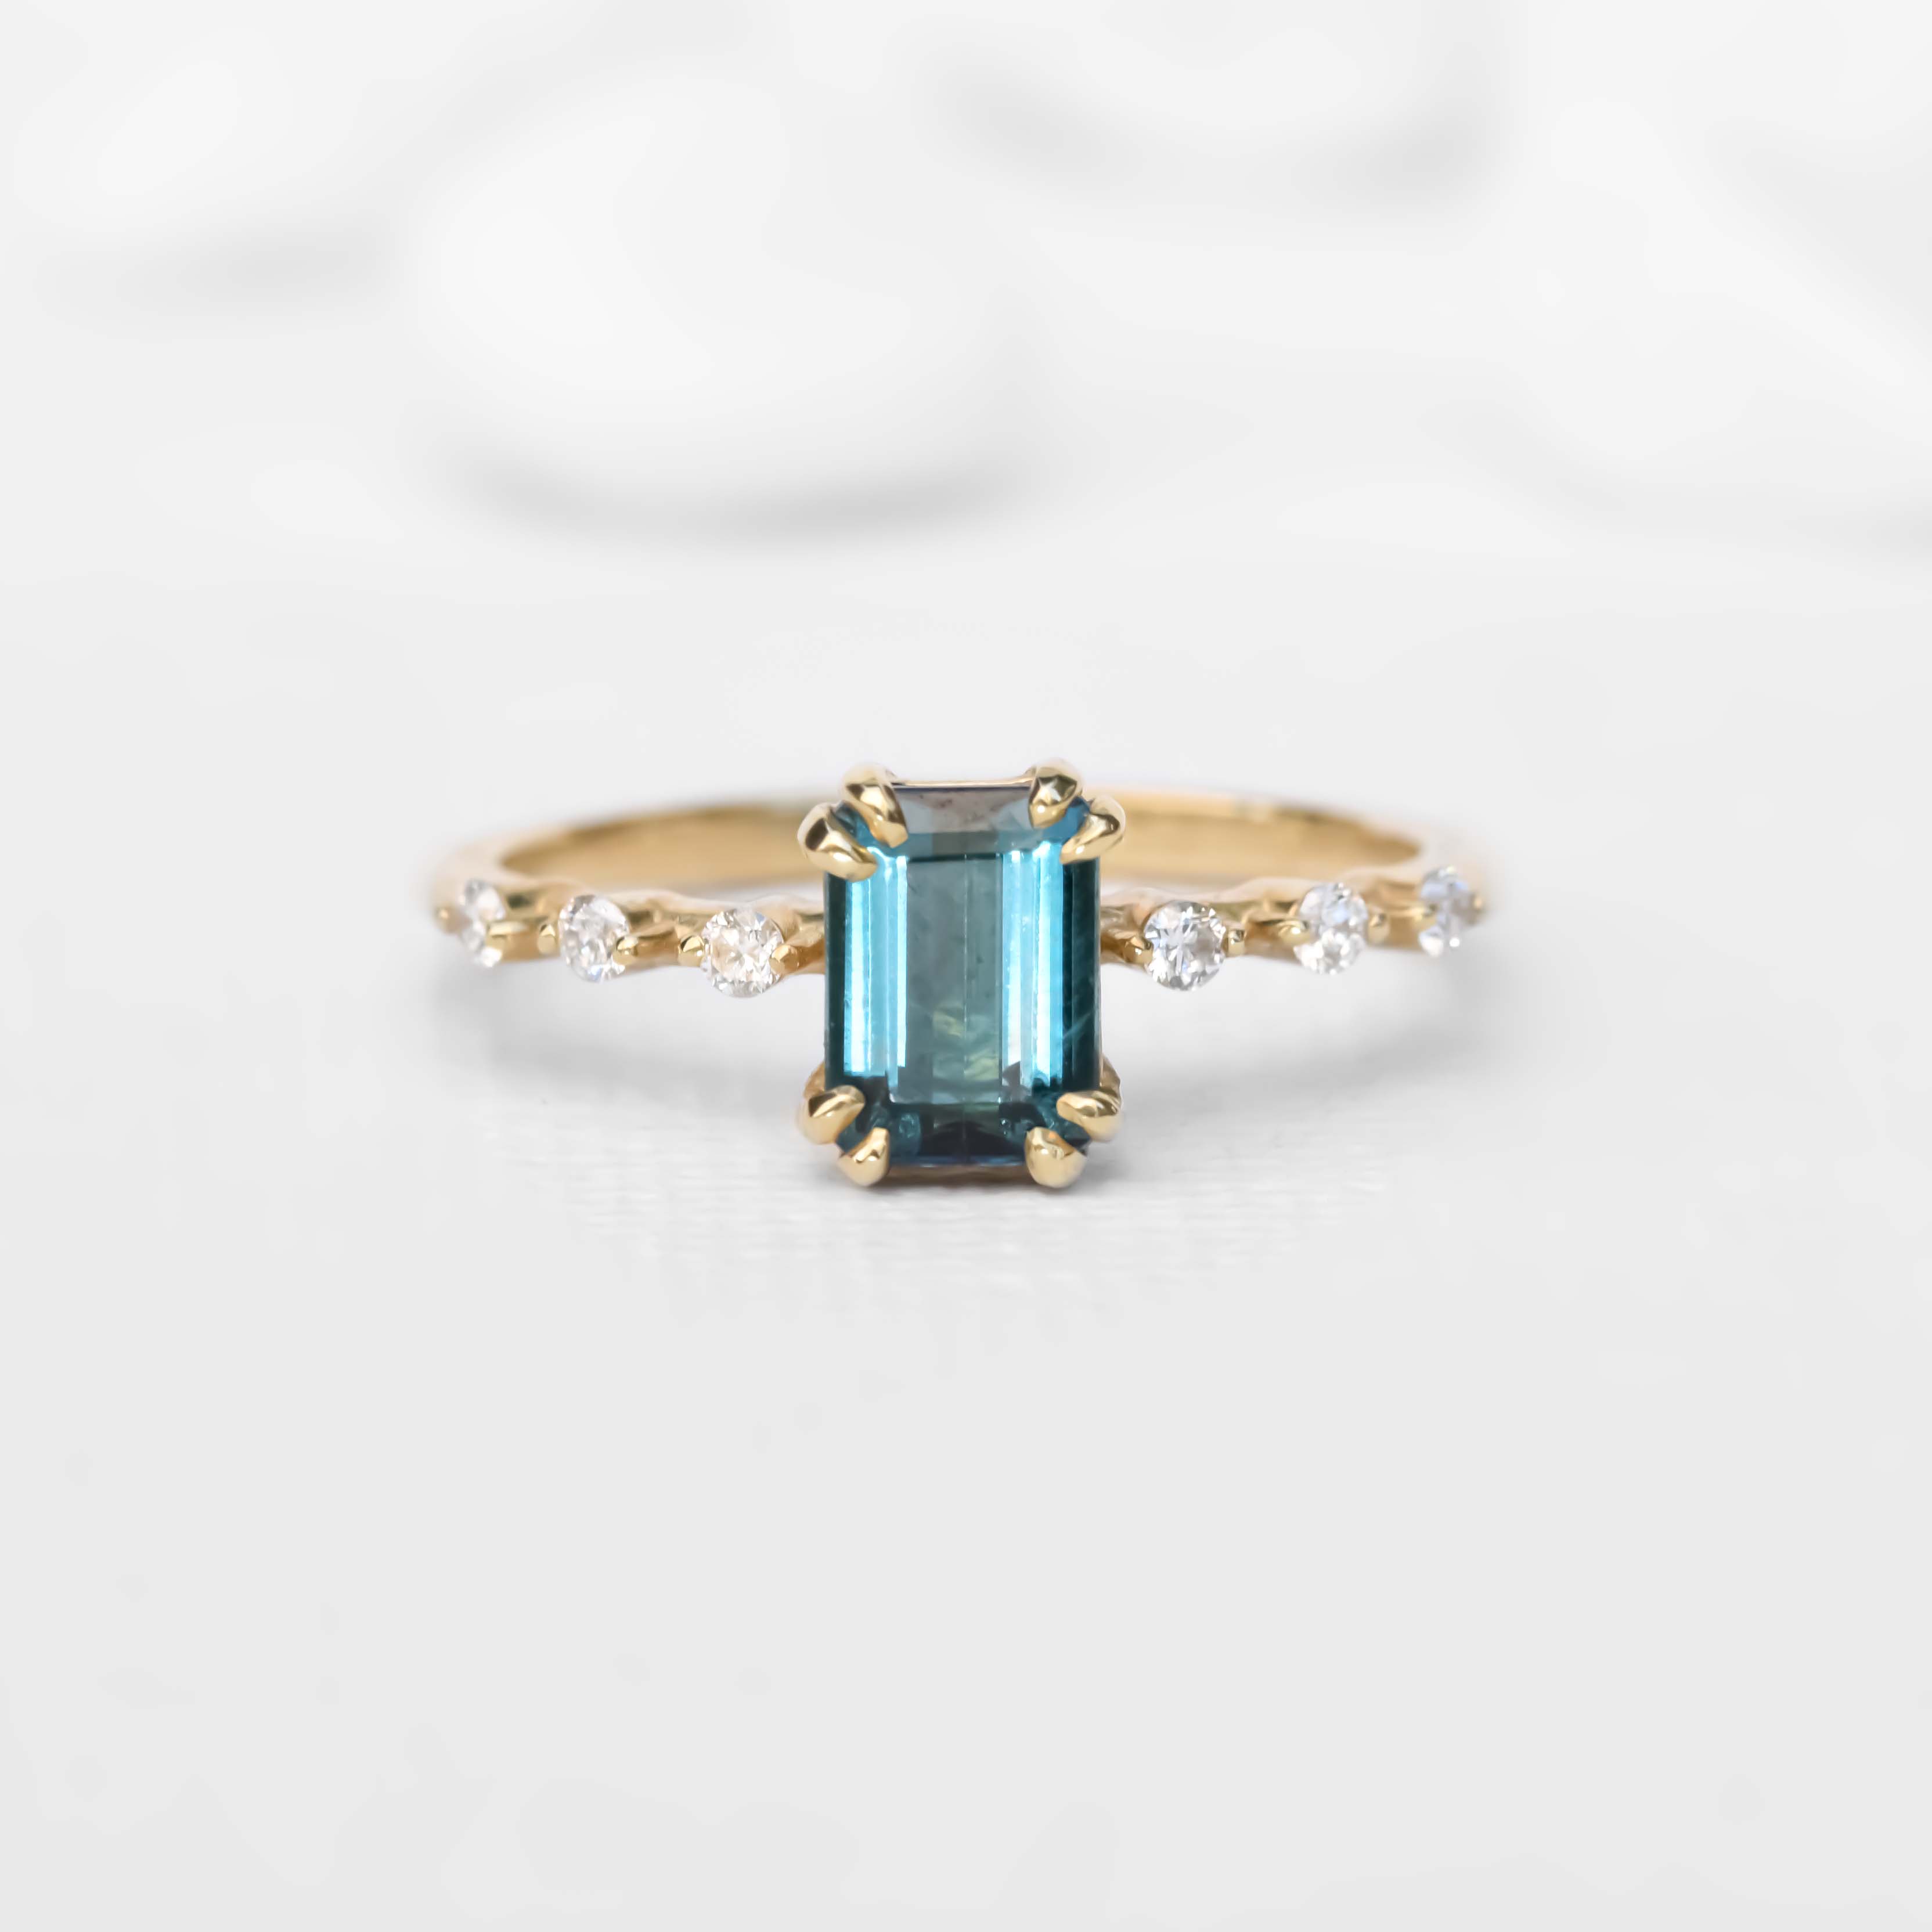  0.9ct Emerald Greenish Blue Tourmaline Ring in 14k Yellow Gold Distance Setting